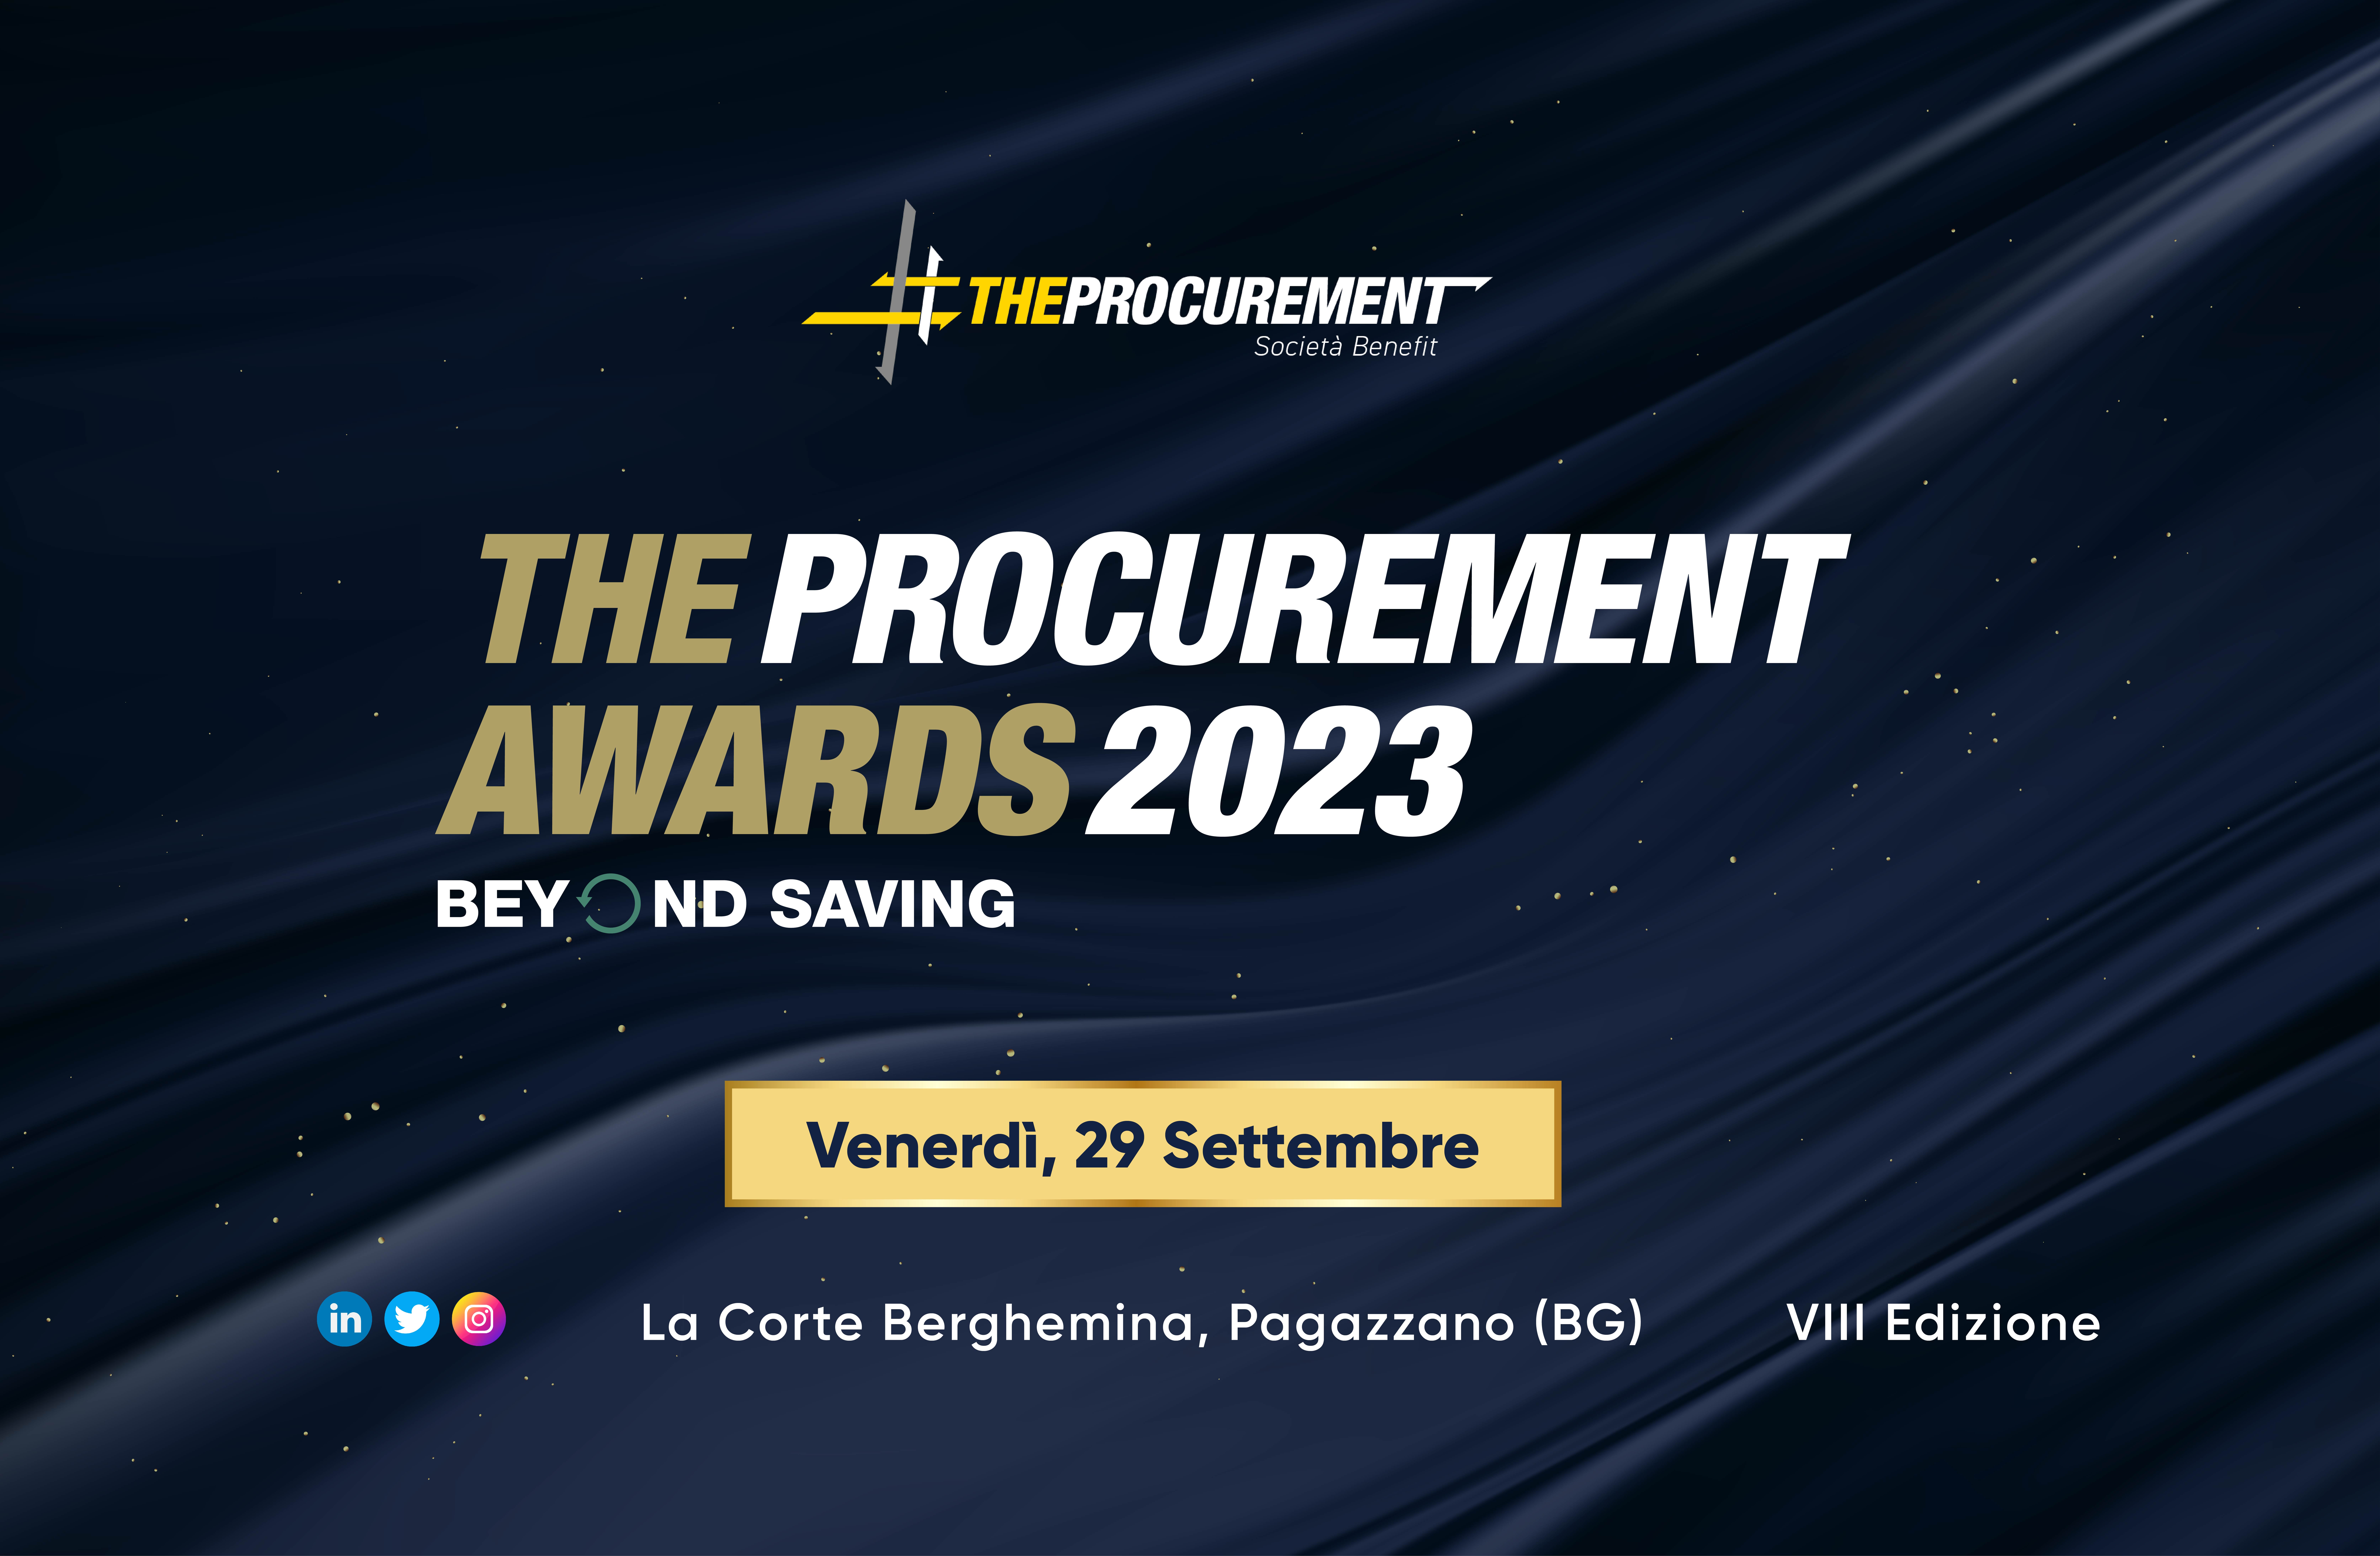 The Procurement Awards 2023